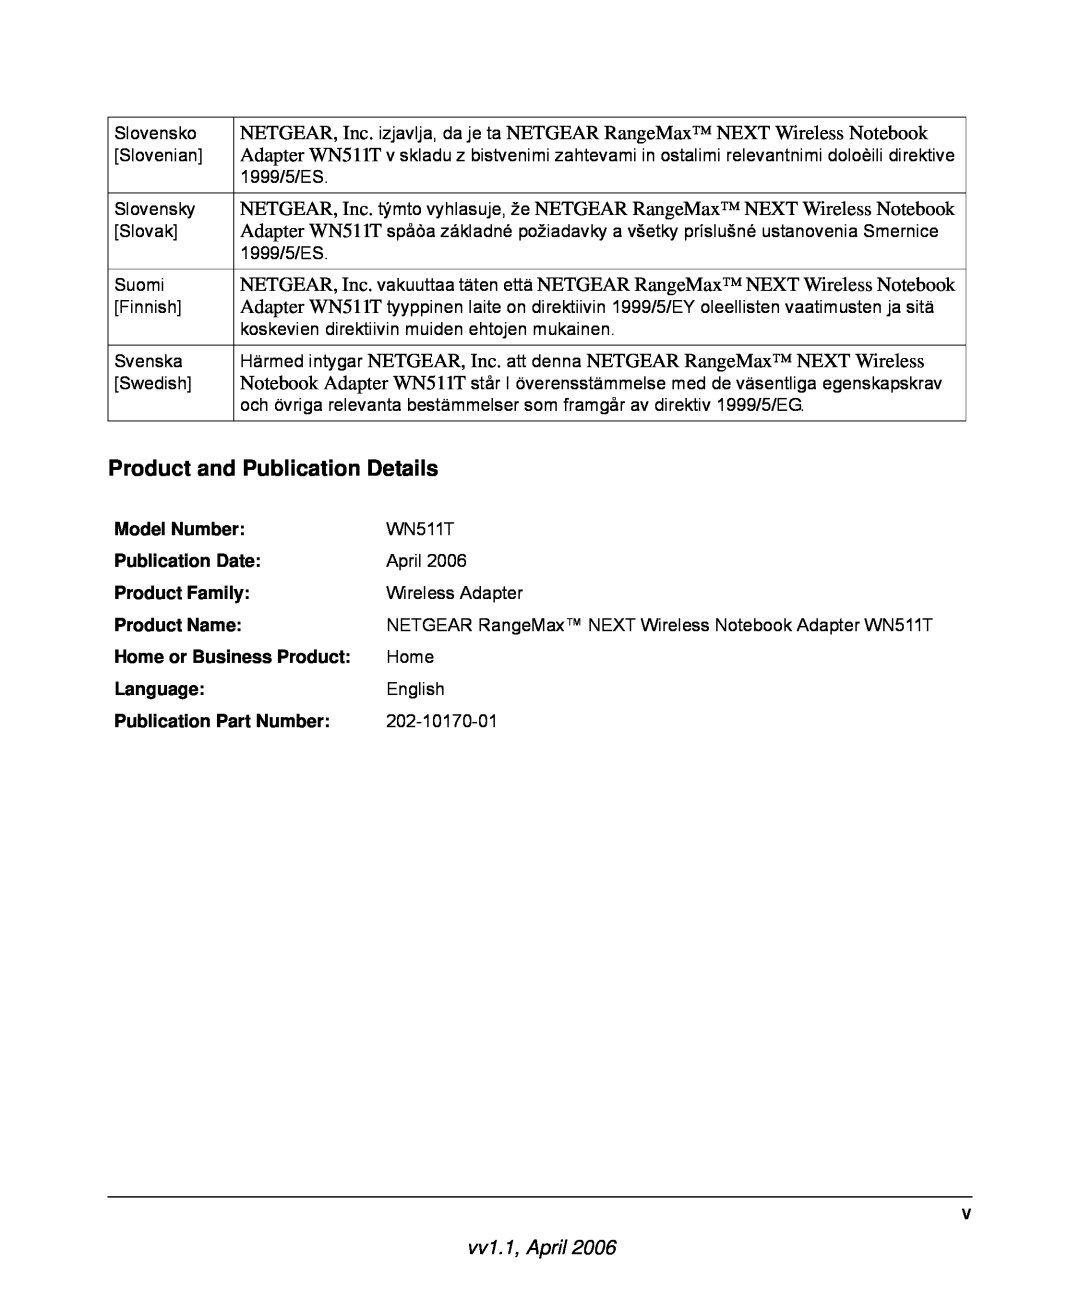 NETGEAR WN511T user manual Product and Publication Details, vv1.1, April 